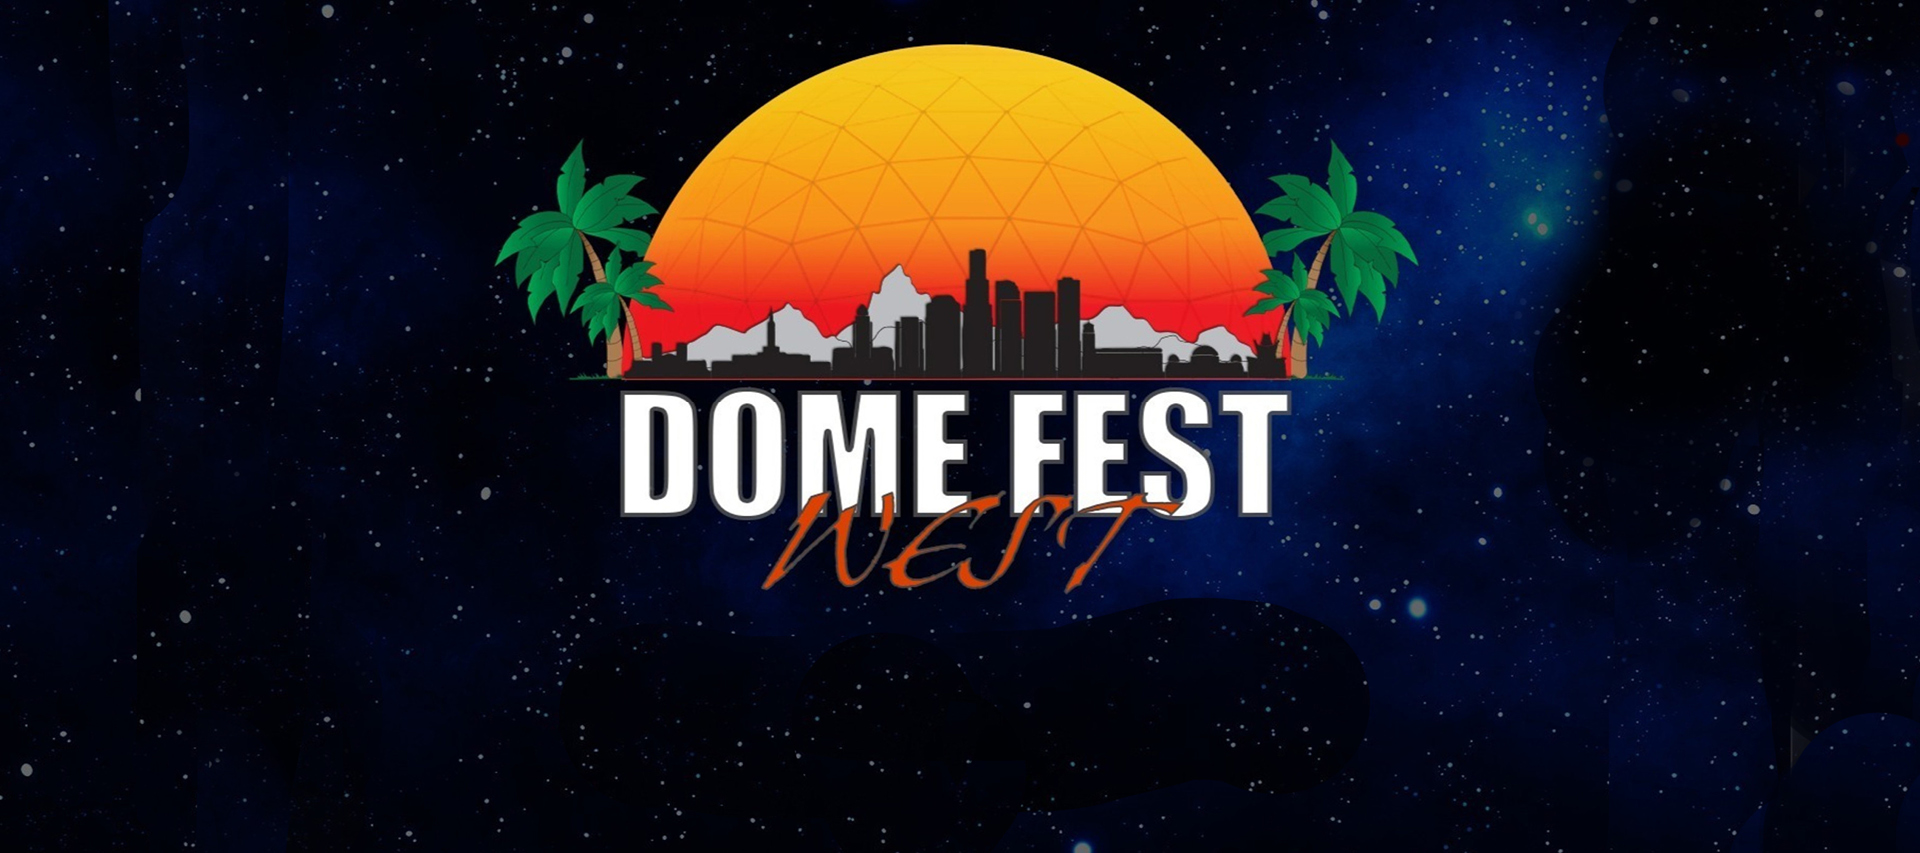 Dome Fest West